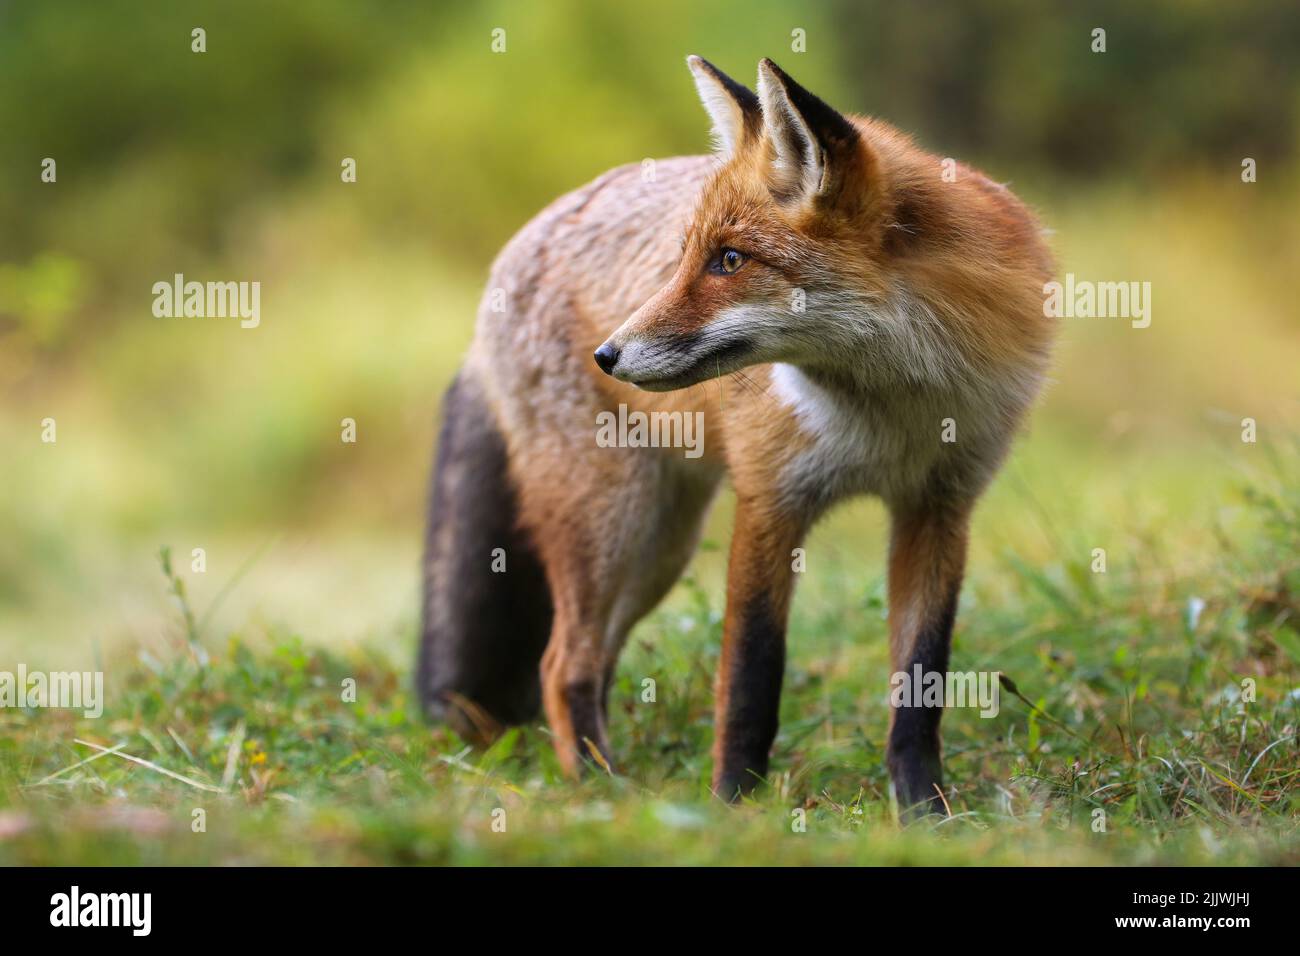 Alert red fox standing on grassland in summer nature Stock Photo